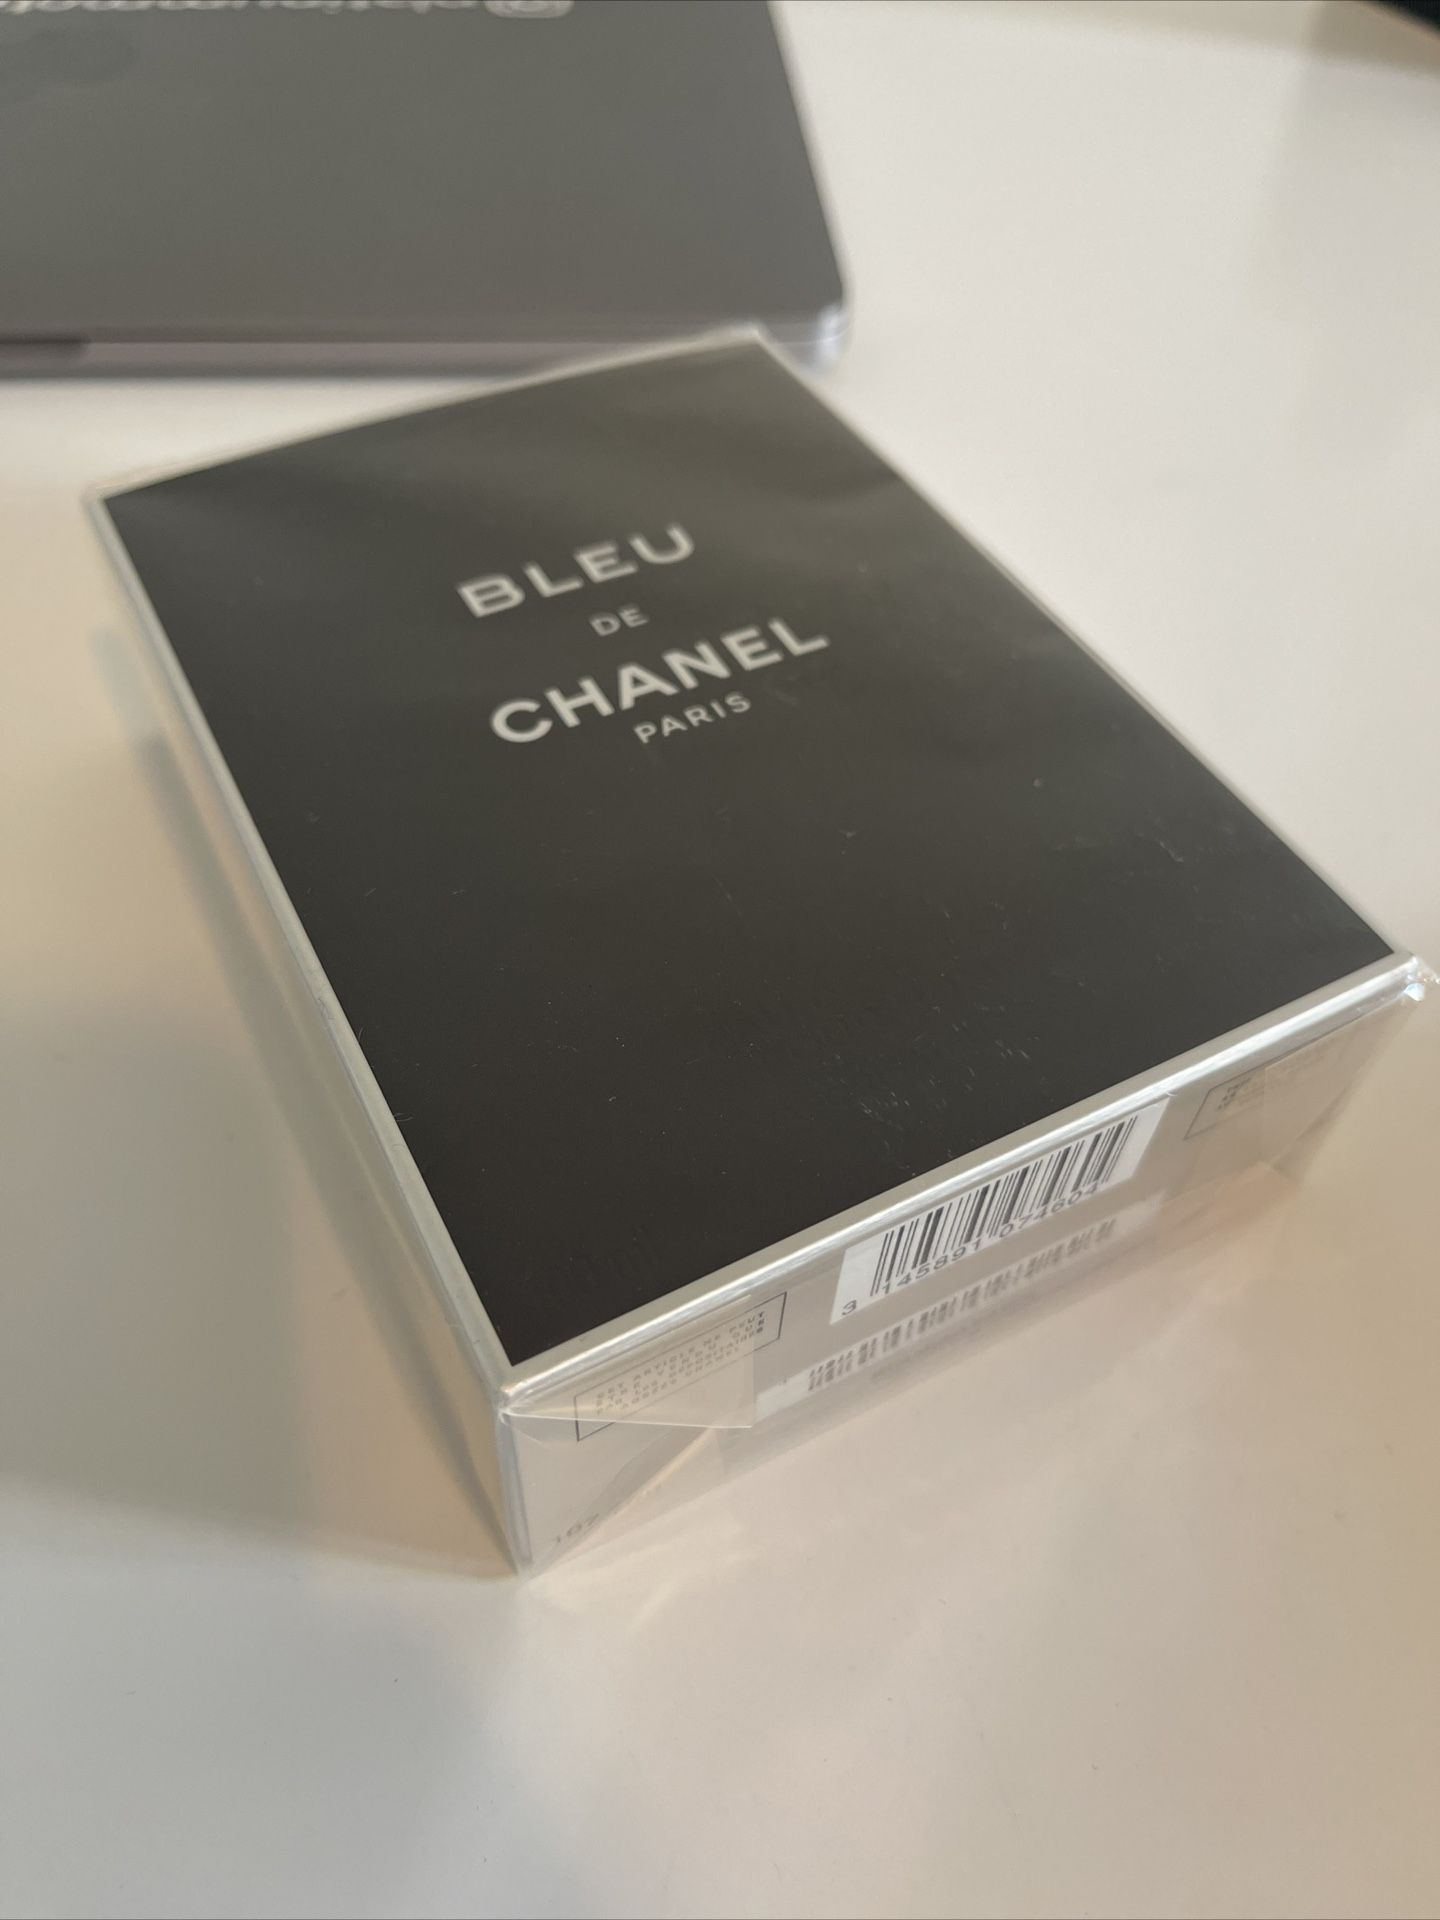 Chanel De Blue Mens Perfume